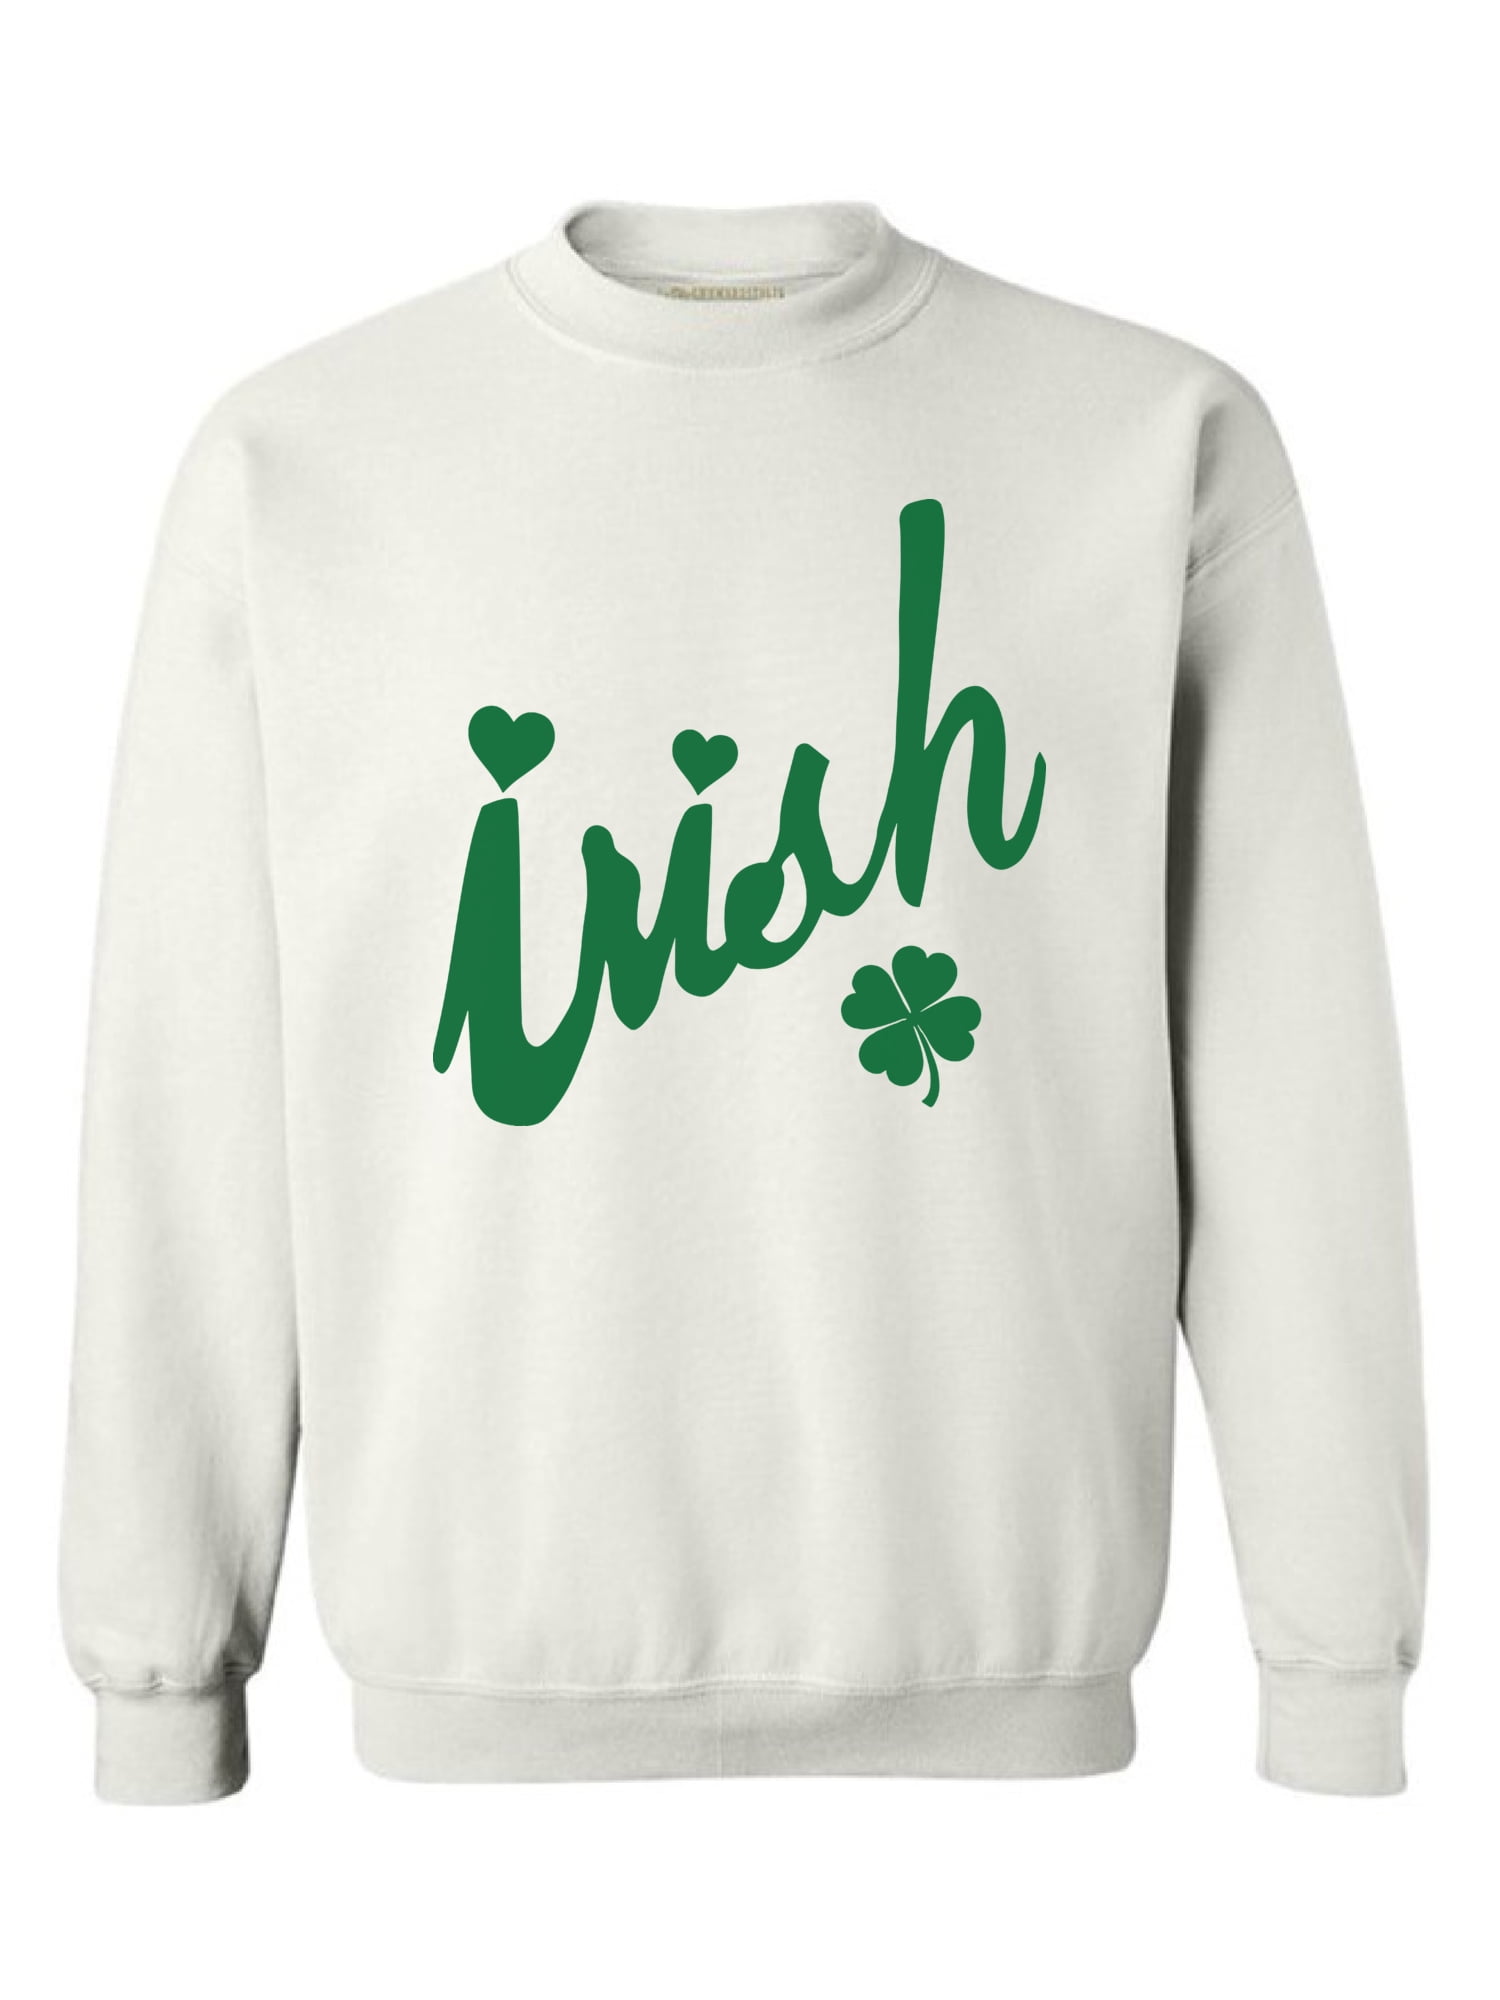 Patricks Day Crewneck Sweater Black YM Wear Adult Irish You Were Beer St